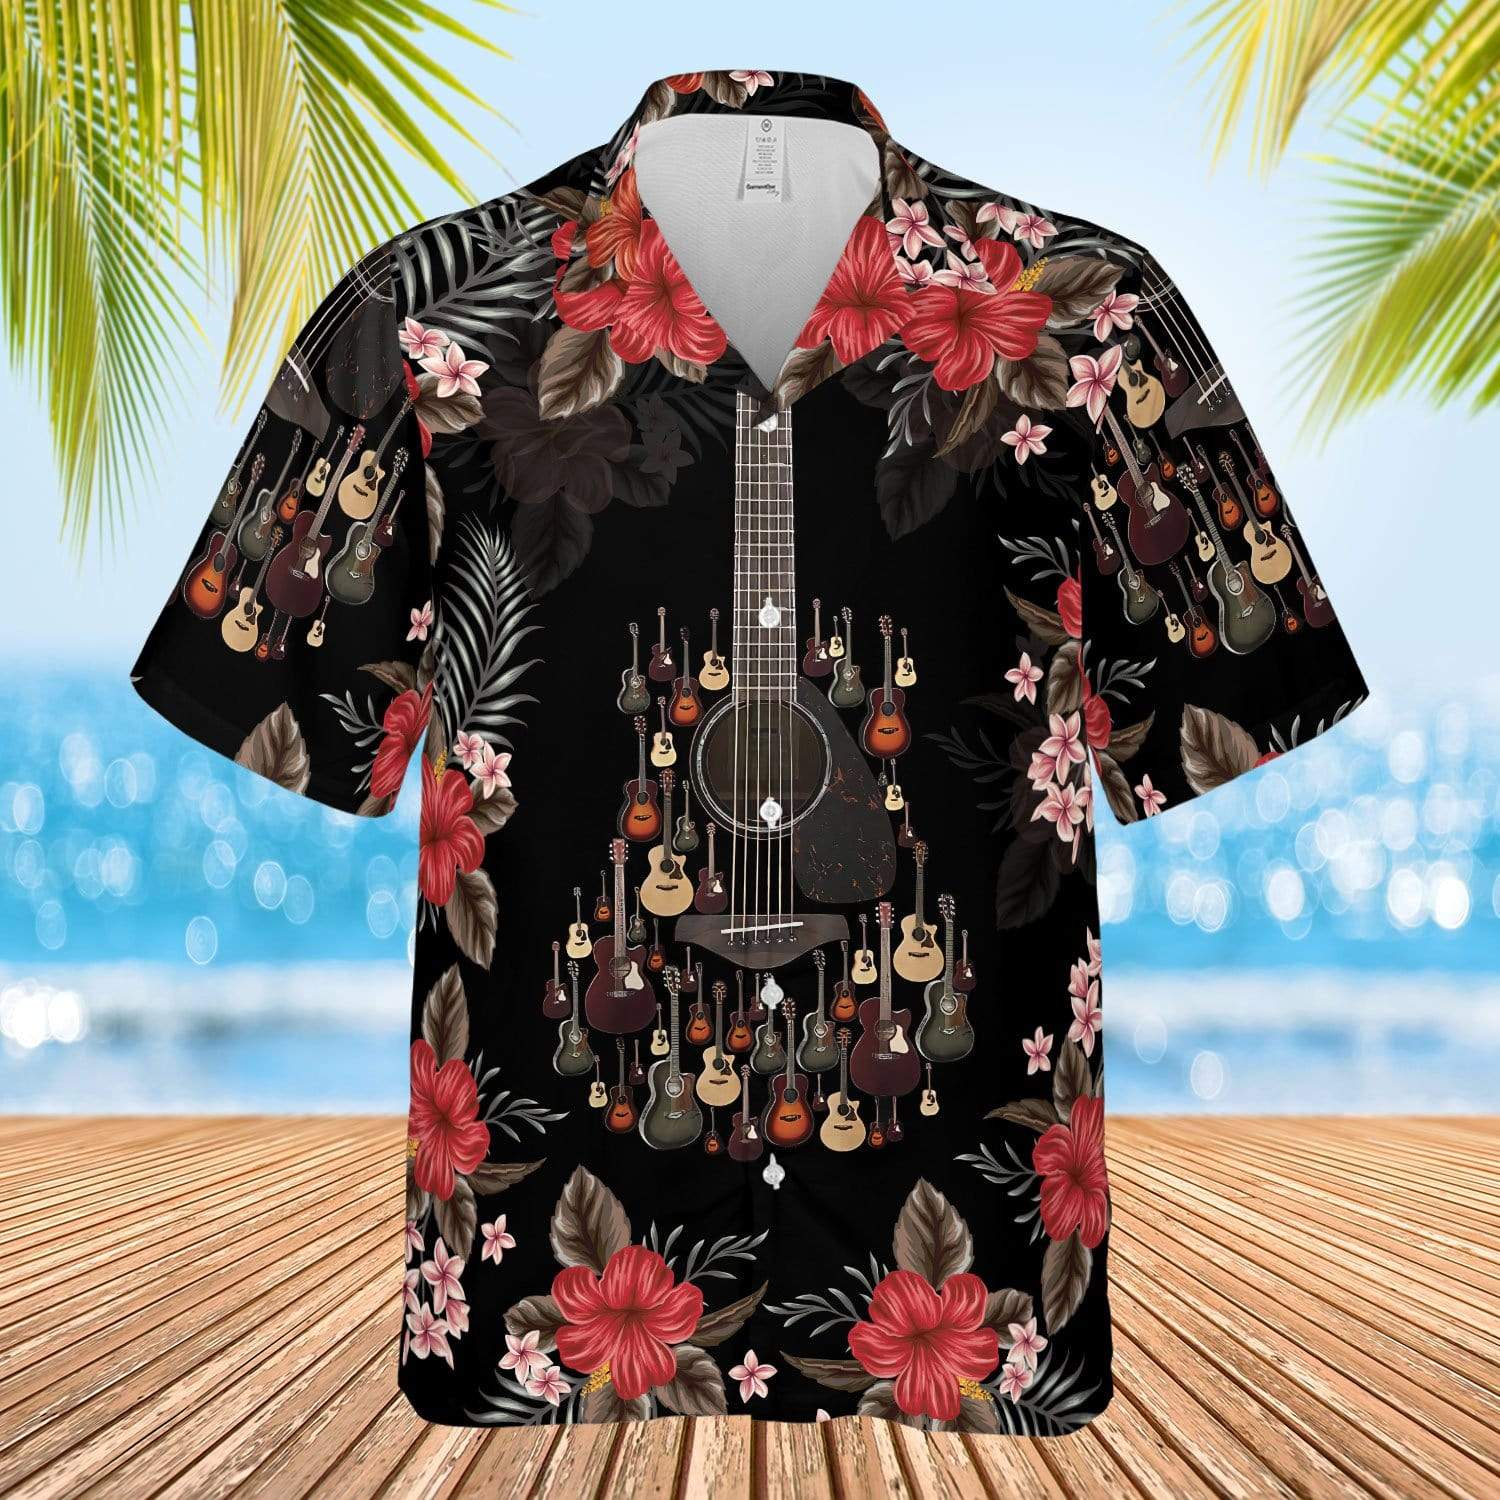 kurobase-amazing-guitar-combine-red-black-floral-hawaiian-shirts.jpg